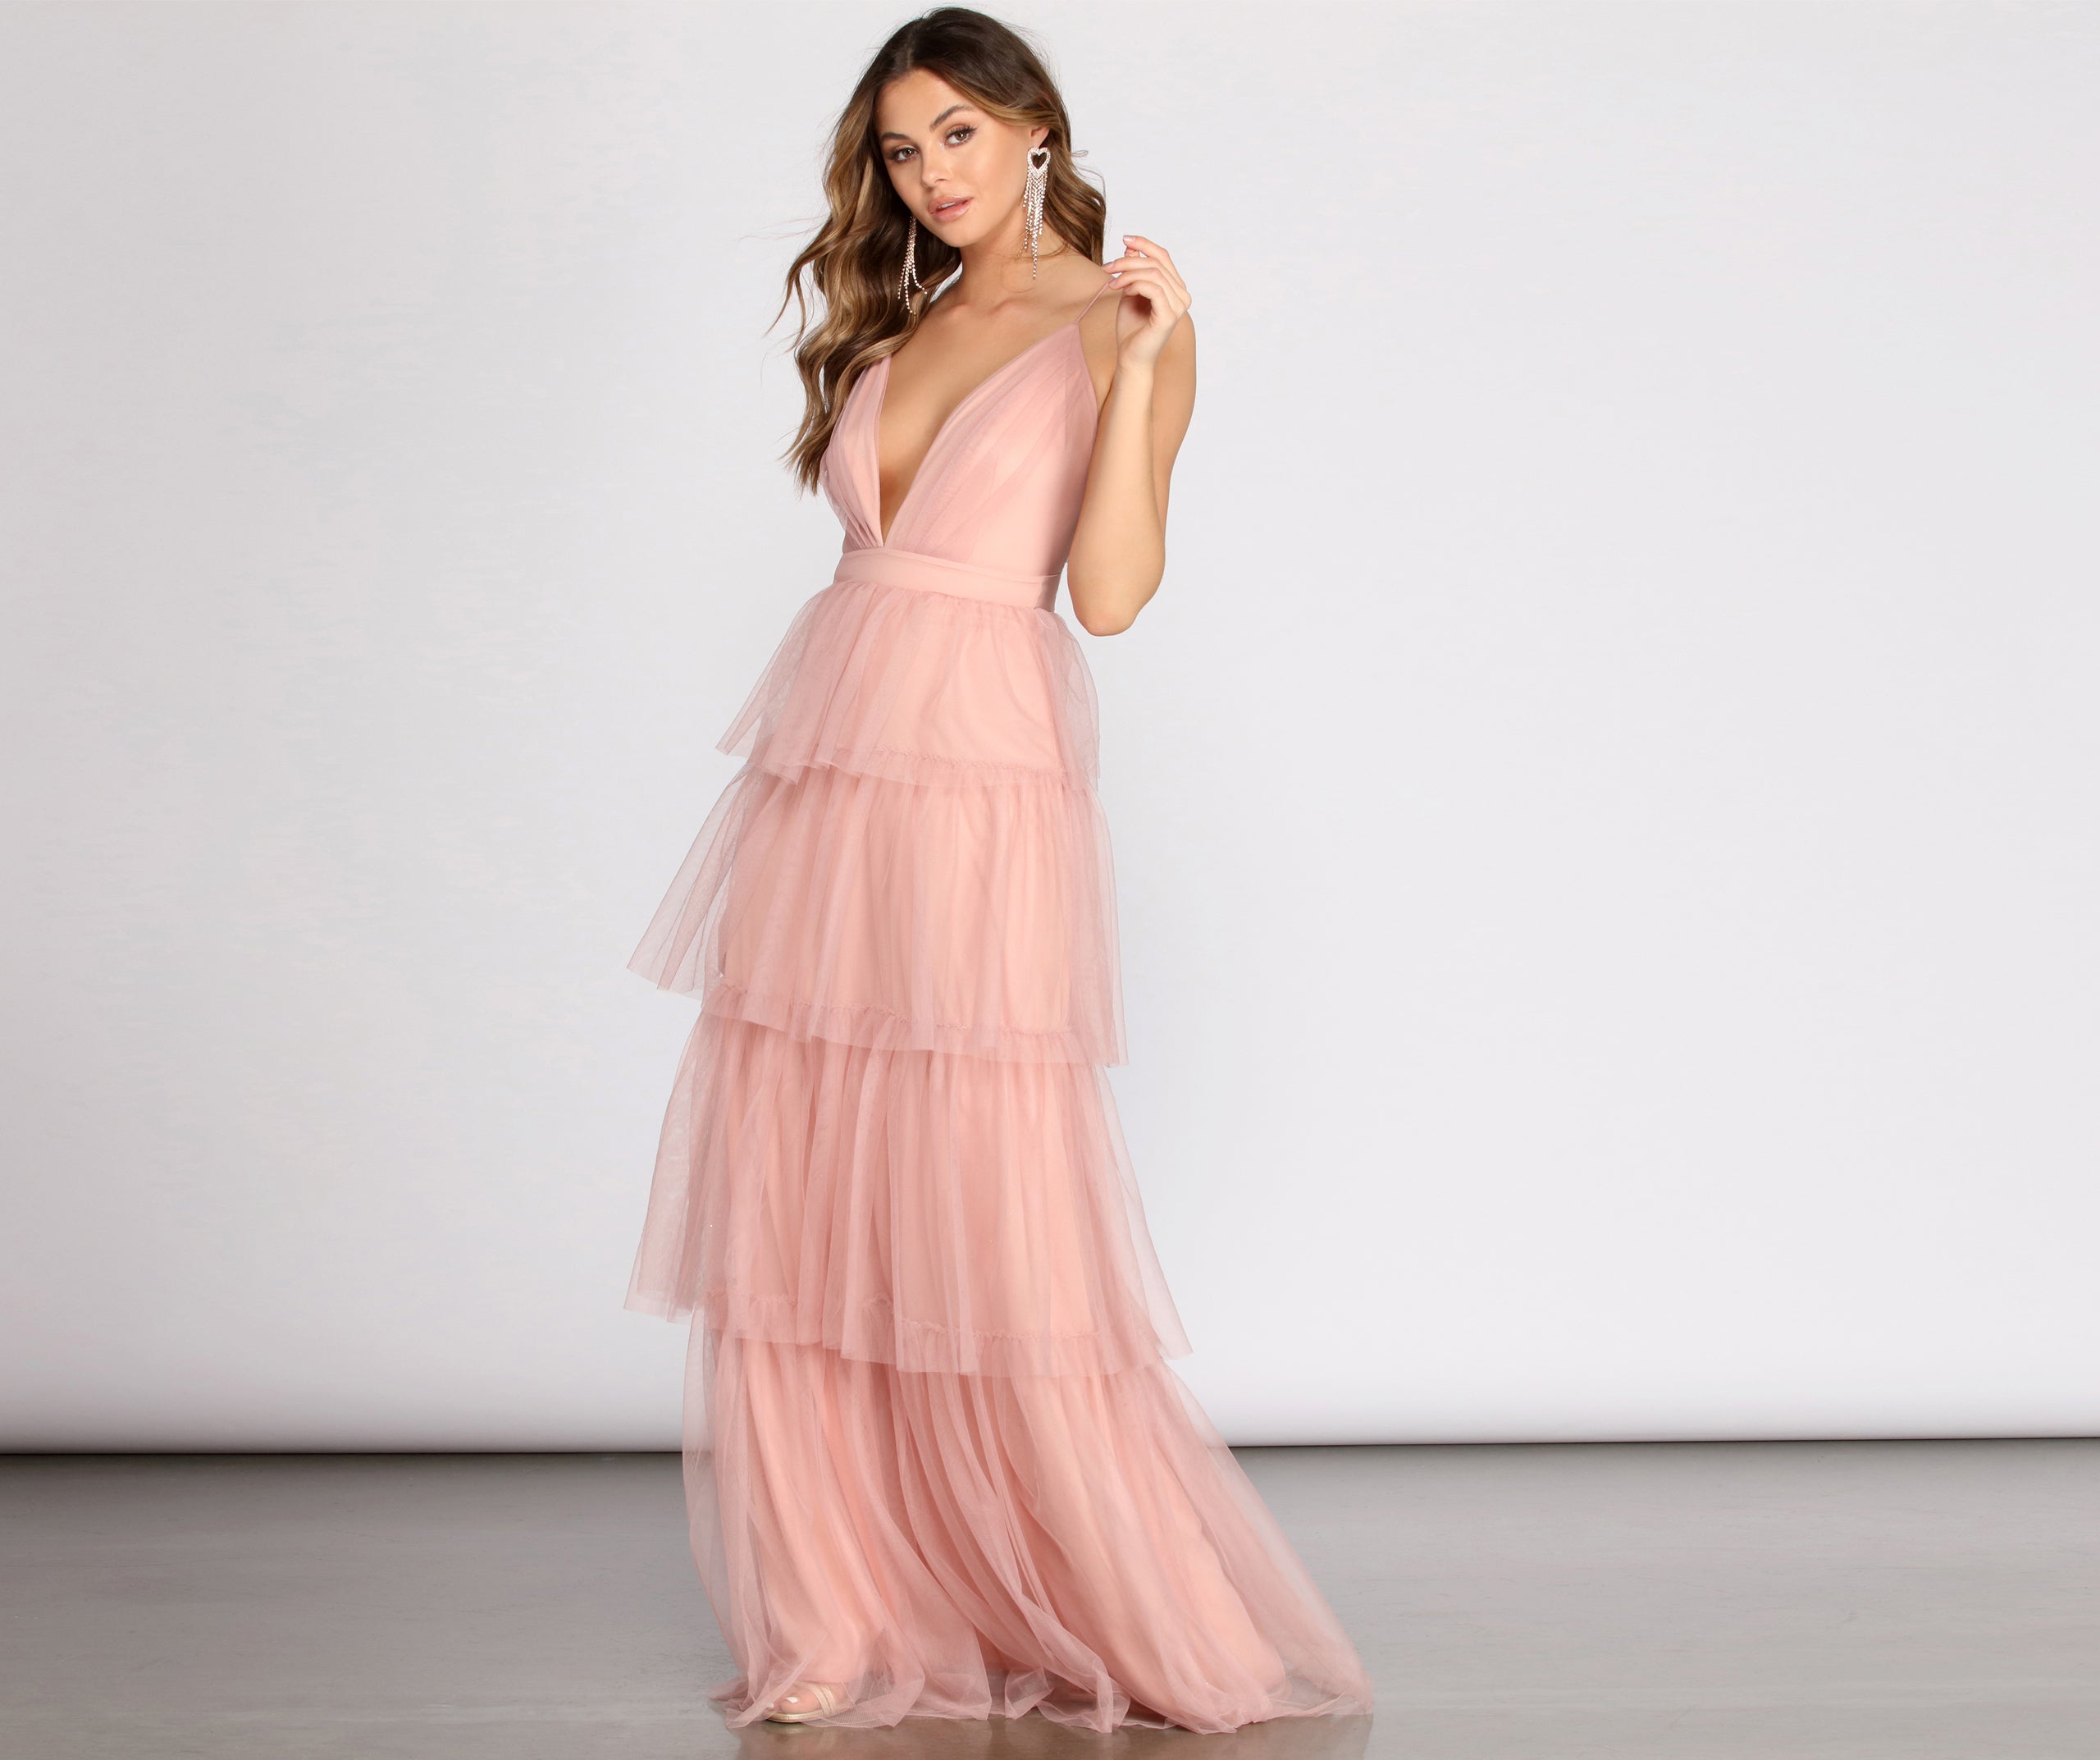 Tulle Dress Flash Sales, 53% OFF | www ...